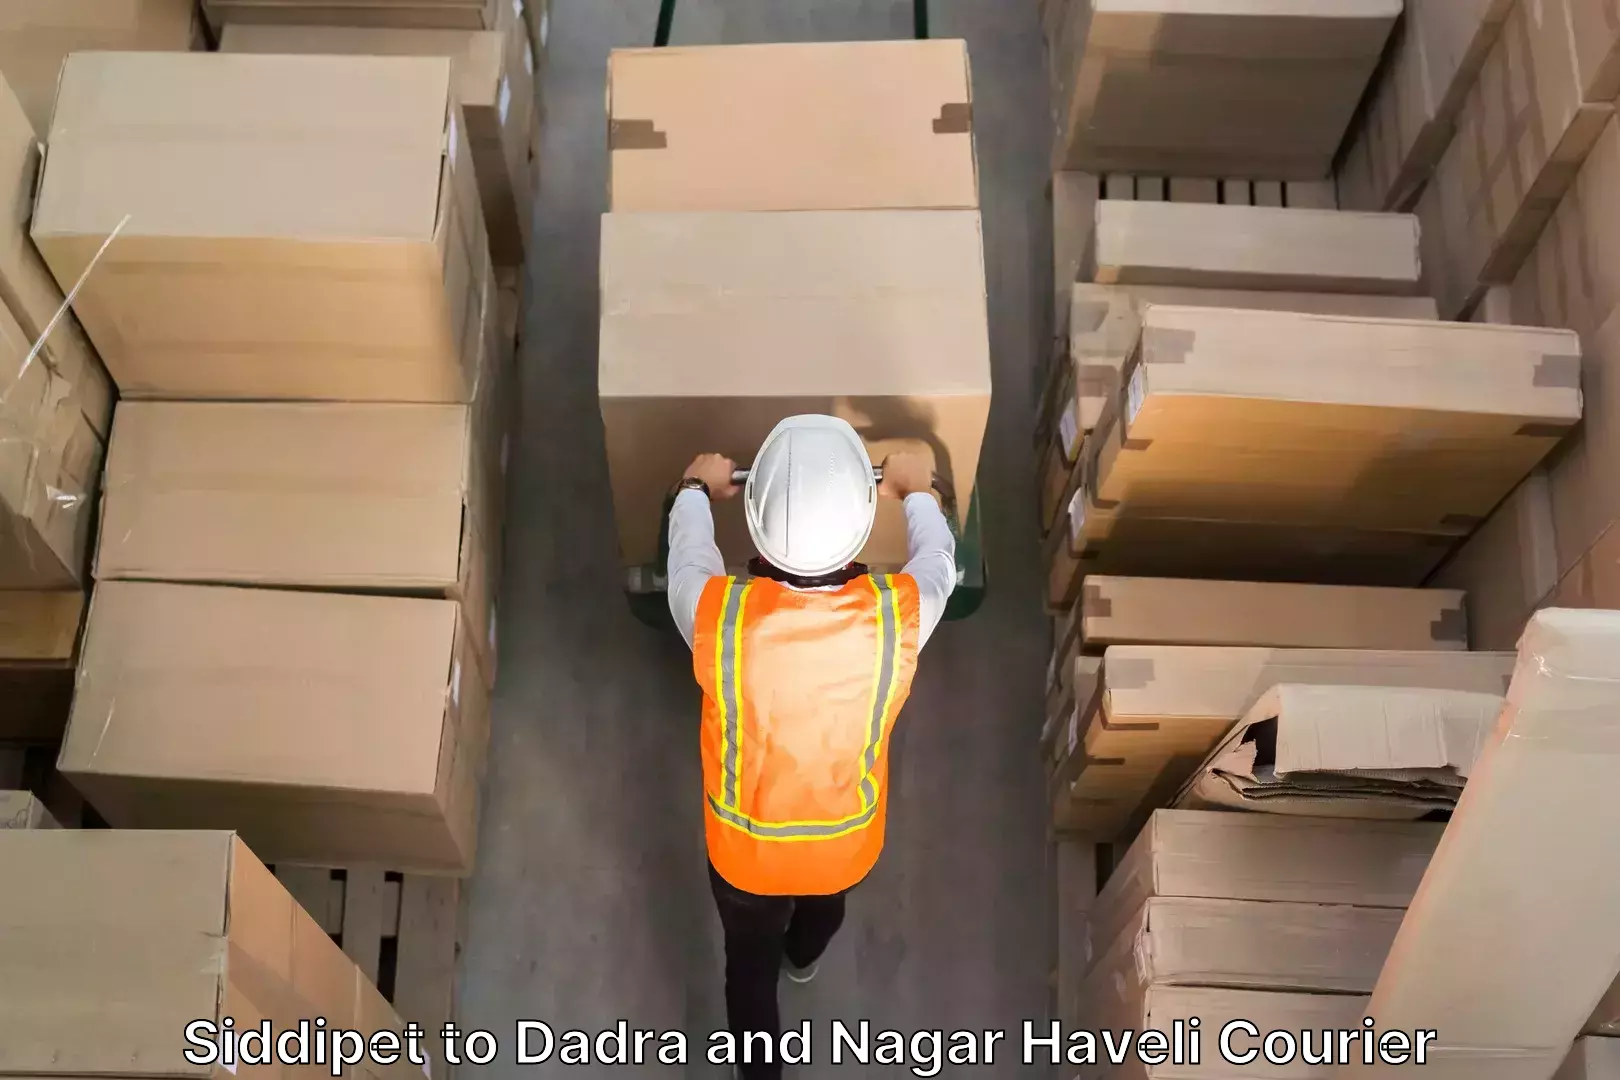 Efficient moving company Siddipet to Dadra and Nagar Haveli